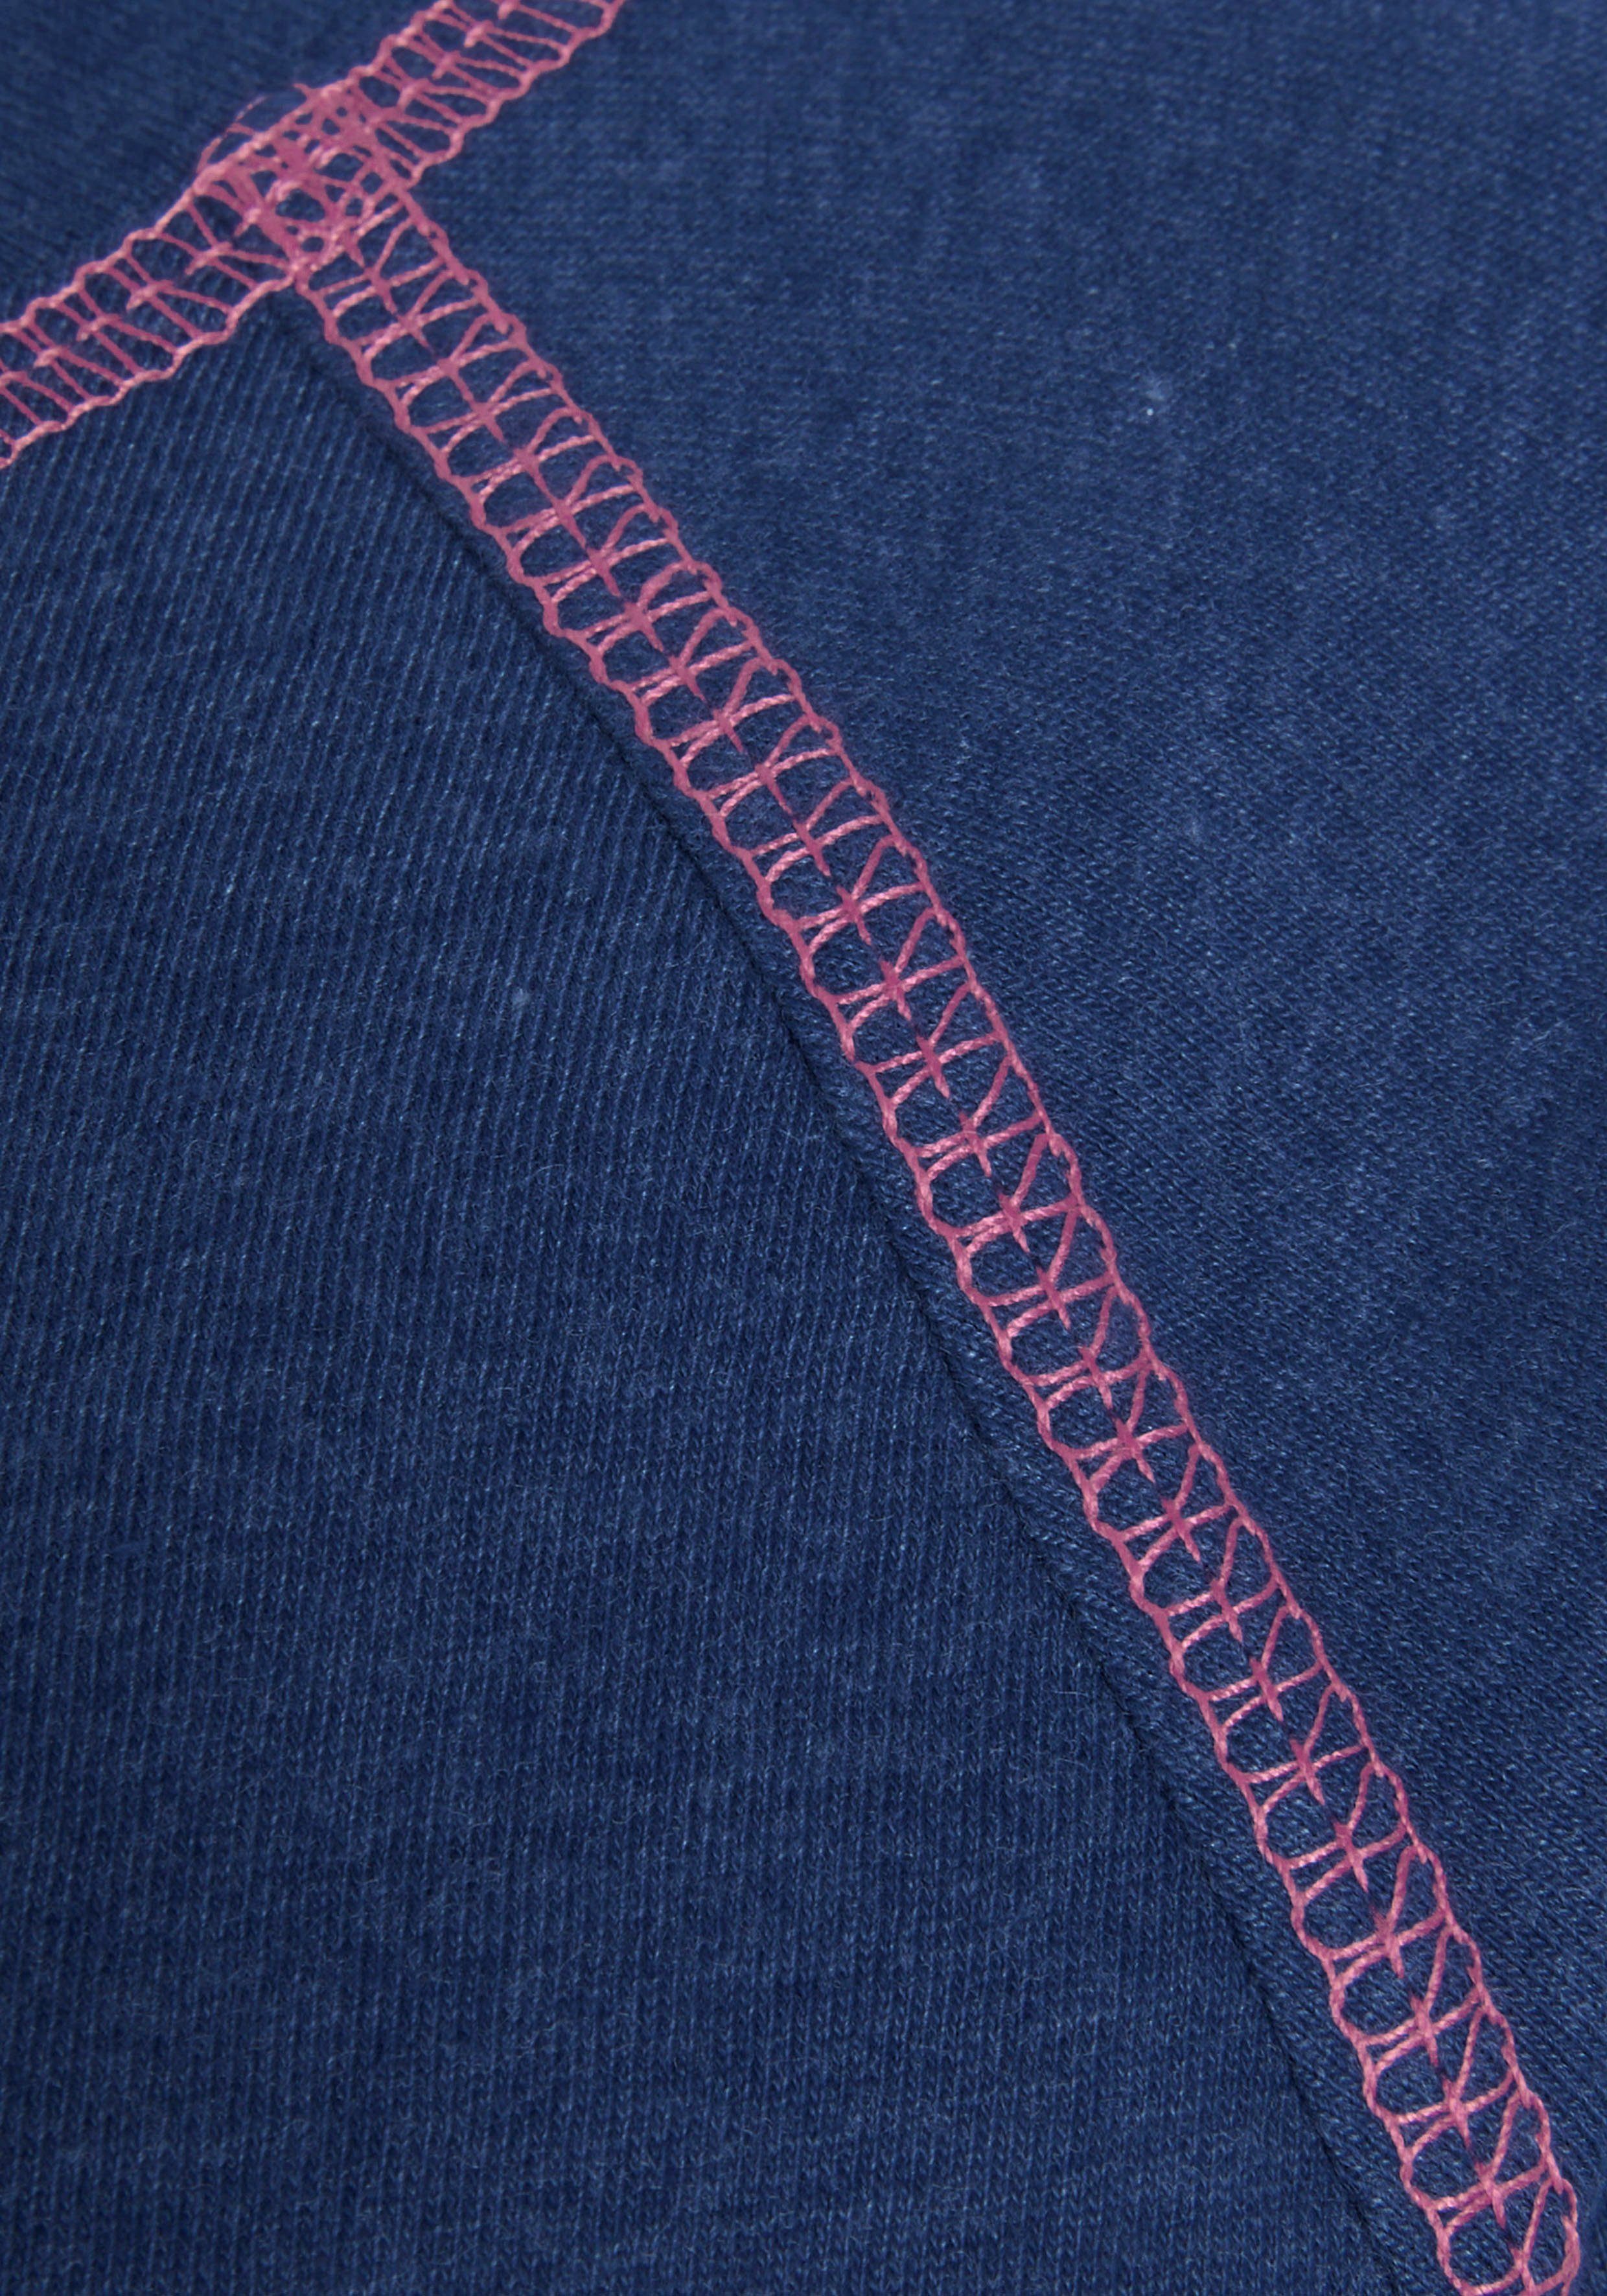 jeansblau/neon-pink Nachthemd (1-tlg) dekorativen Vivance Dreams mit Flatlock-Nähten in Neonfarben